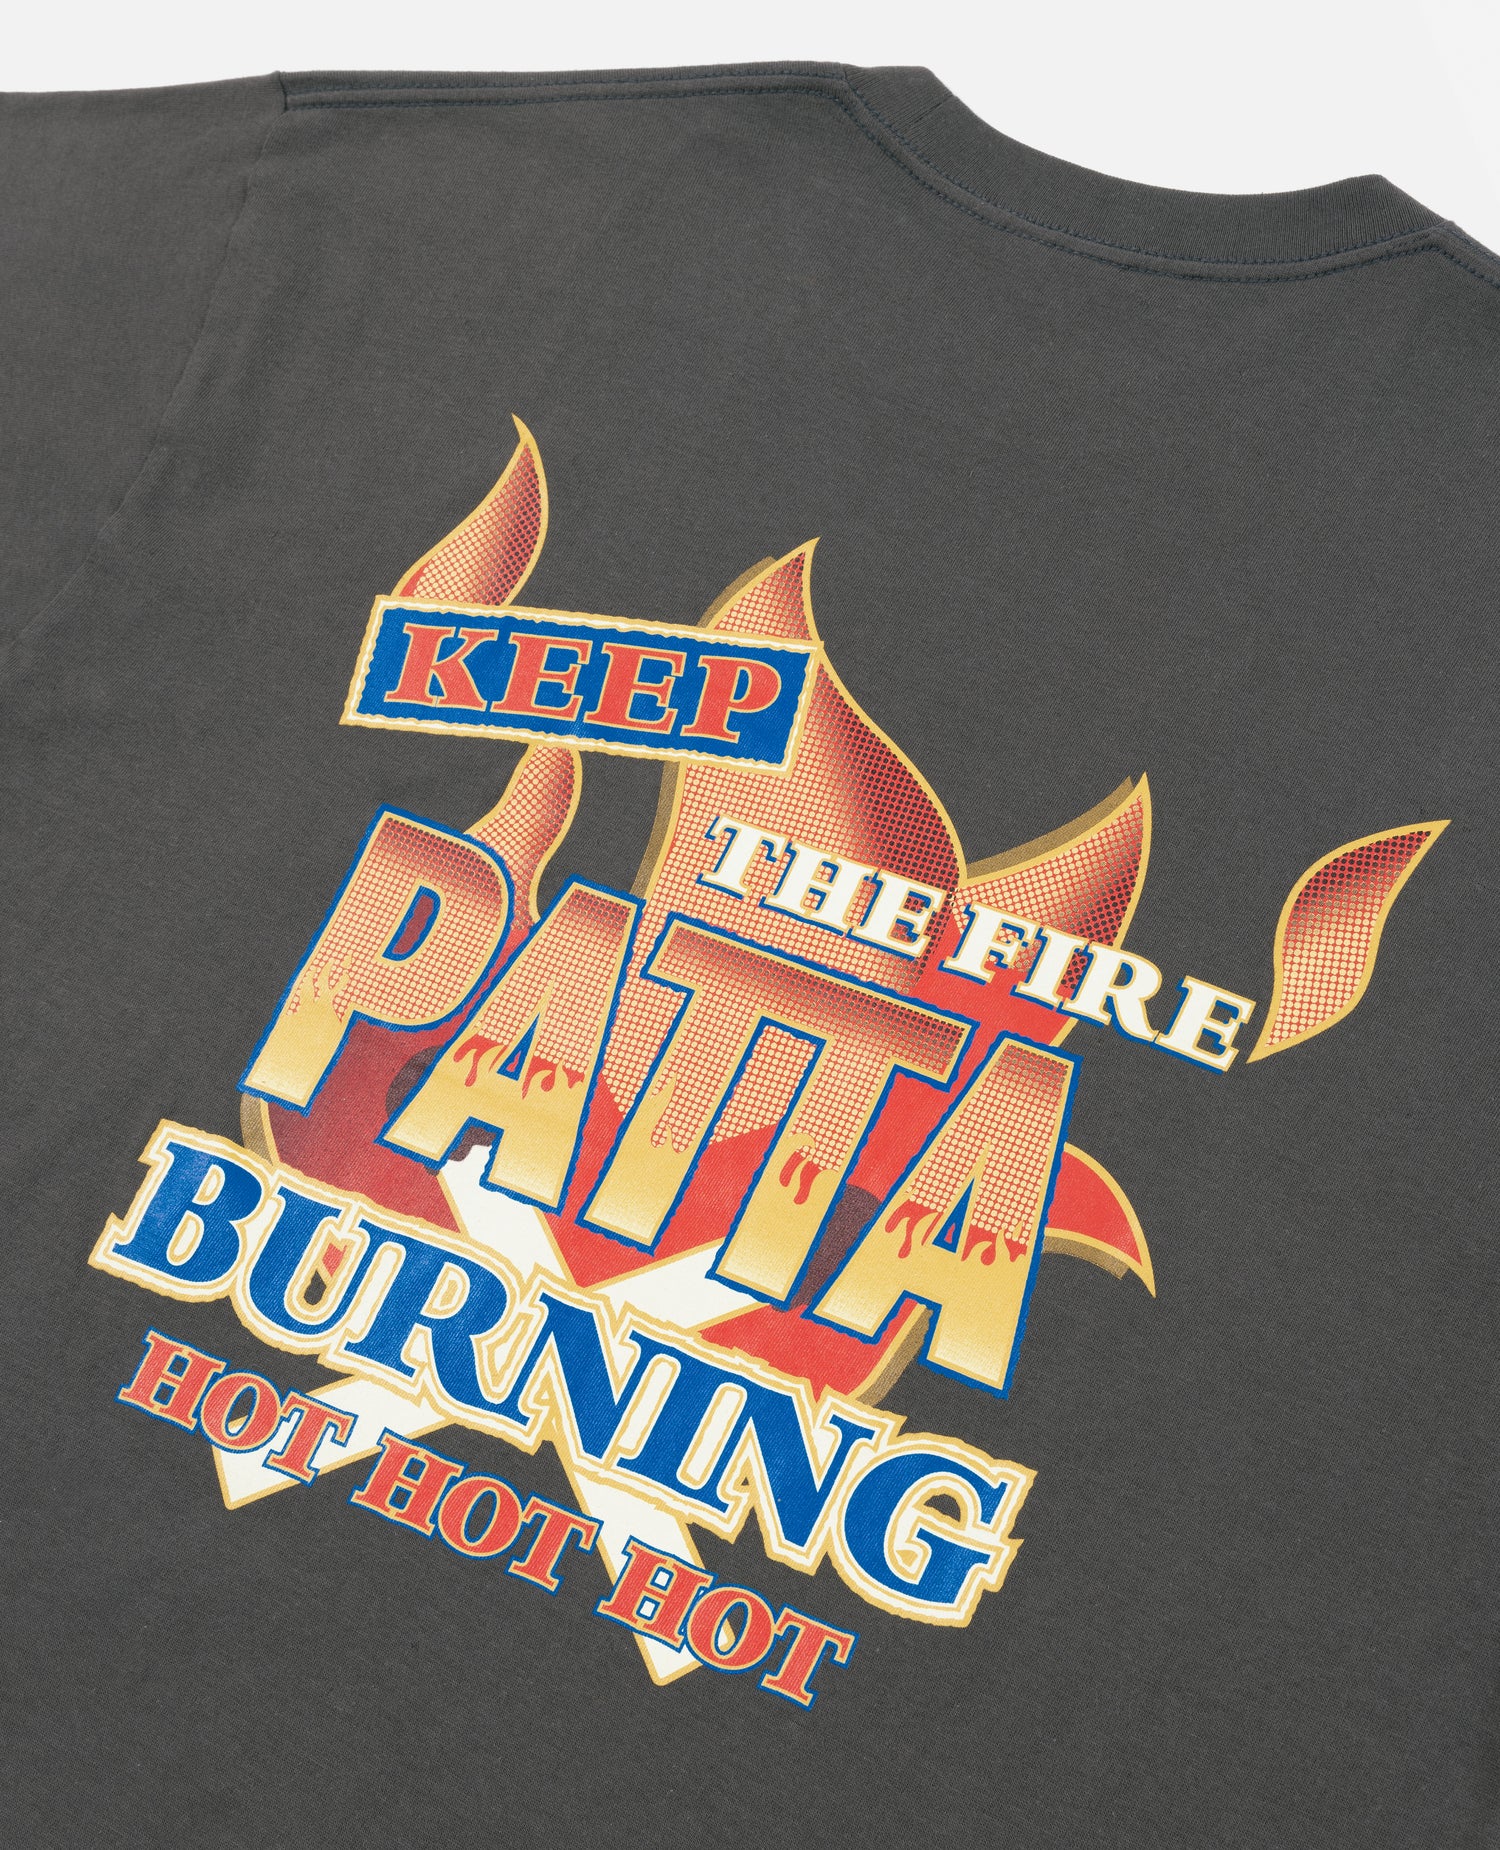 Patta Keep The Fire Burning T-Shirt (Raven)